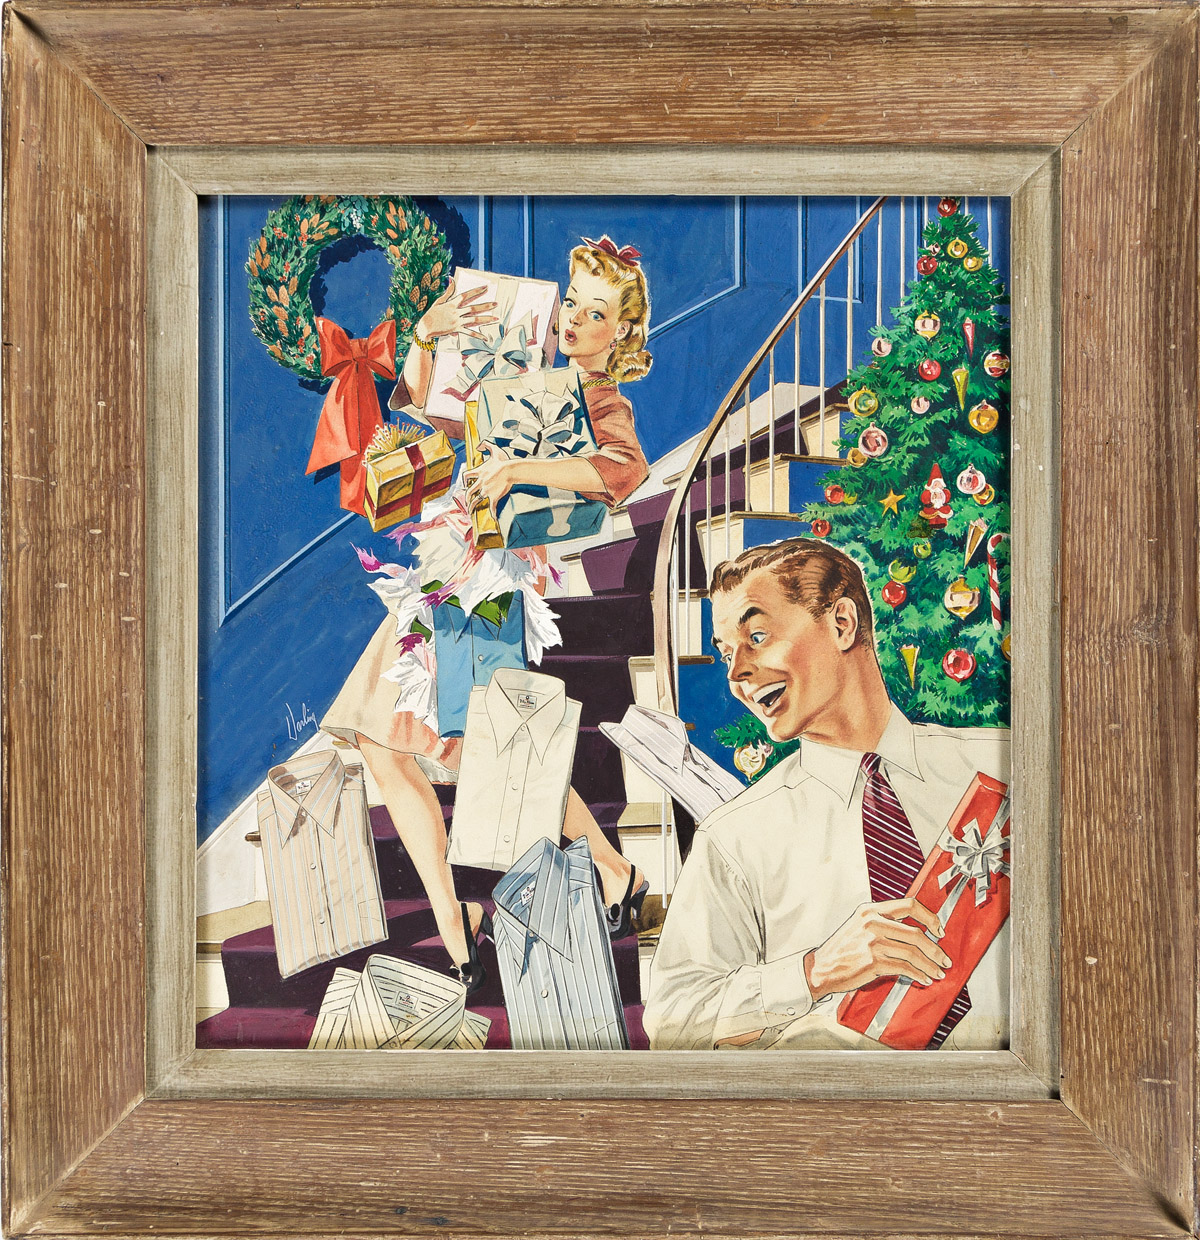 GILBERT DARLING (1916-1970) Van Heusen shirts Christmas advertisement.